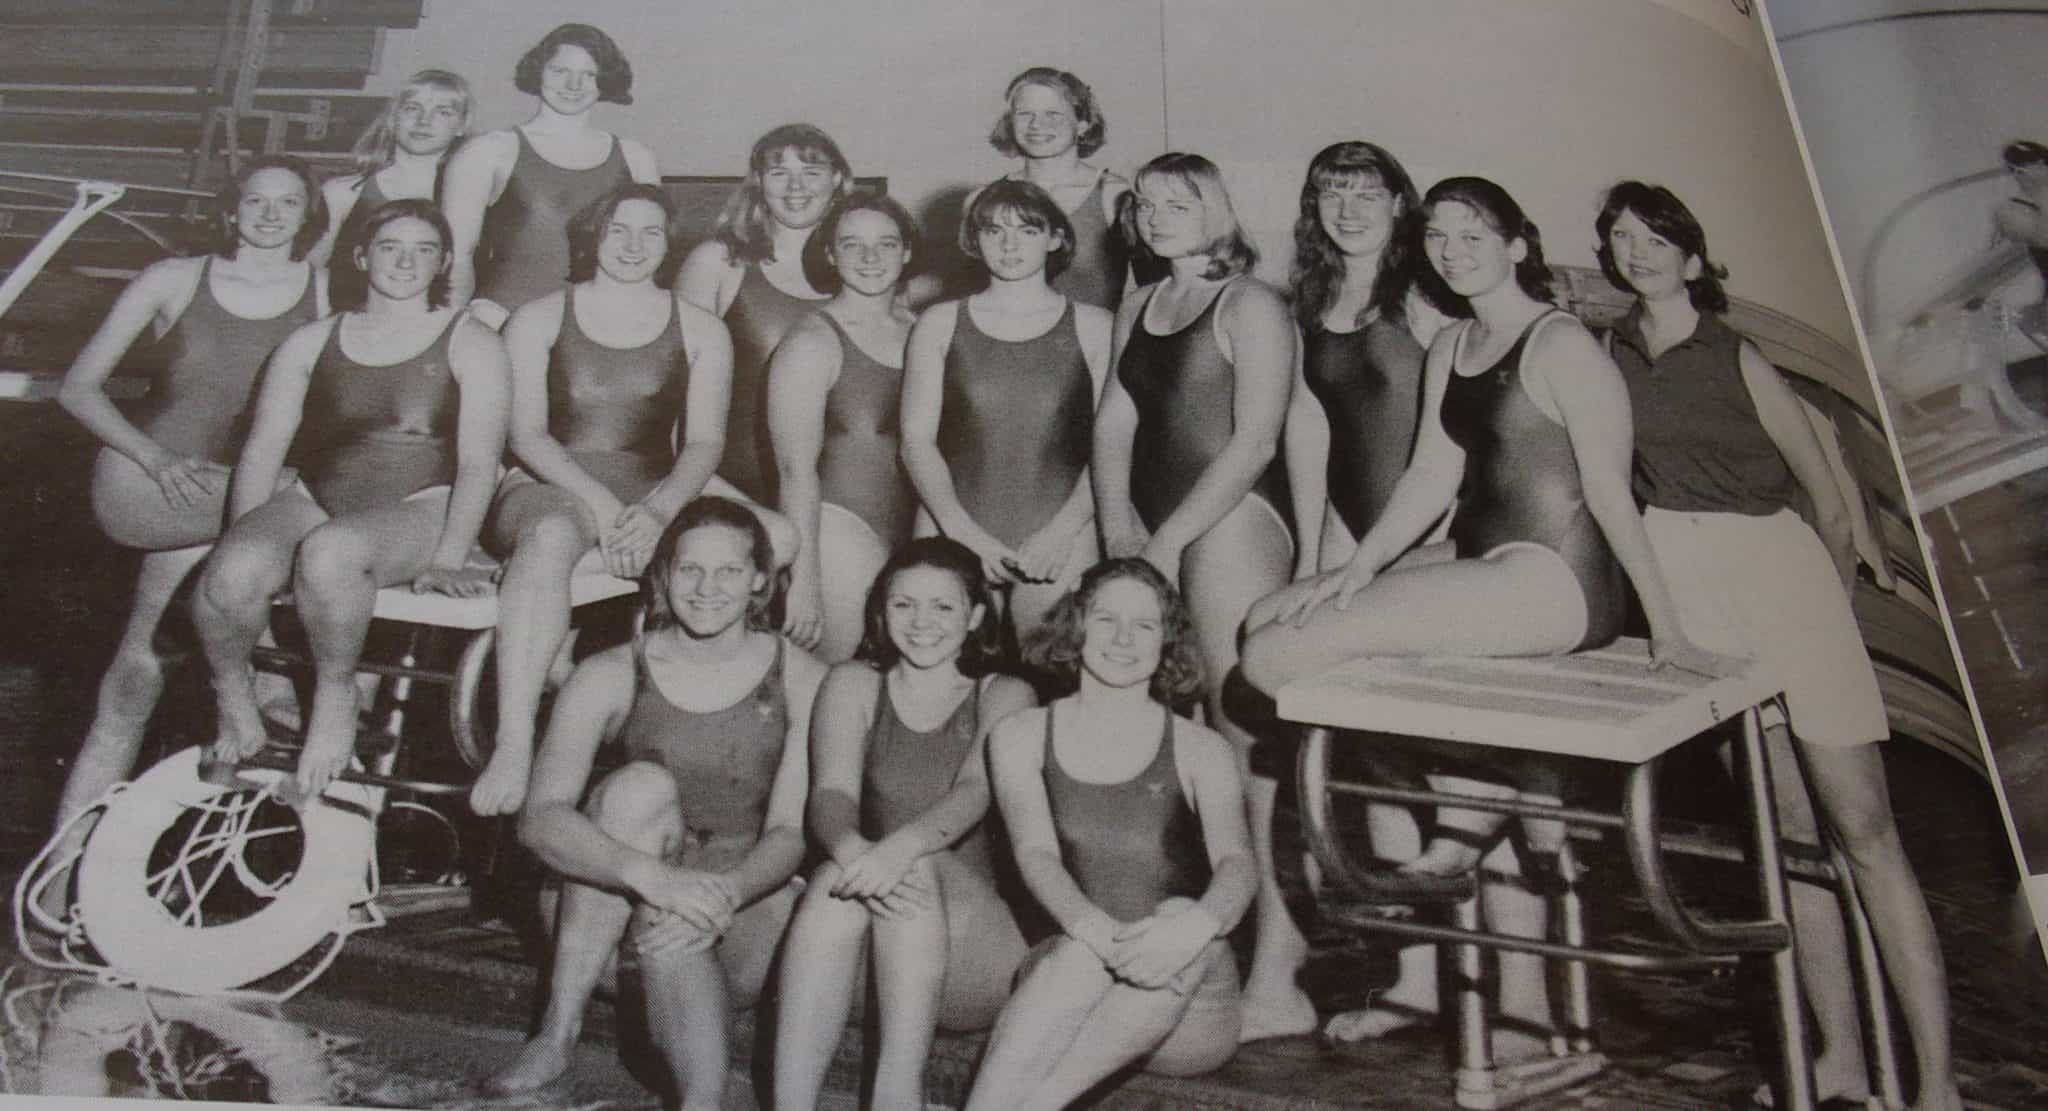 Tomahawk sports history: Girls’ swimming